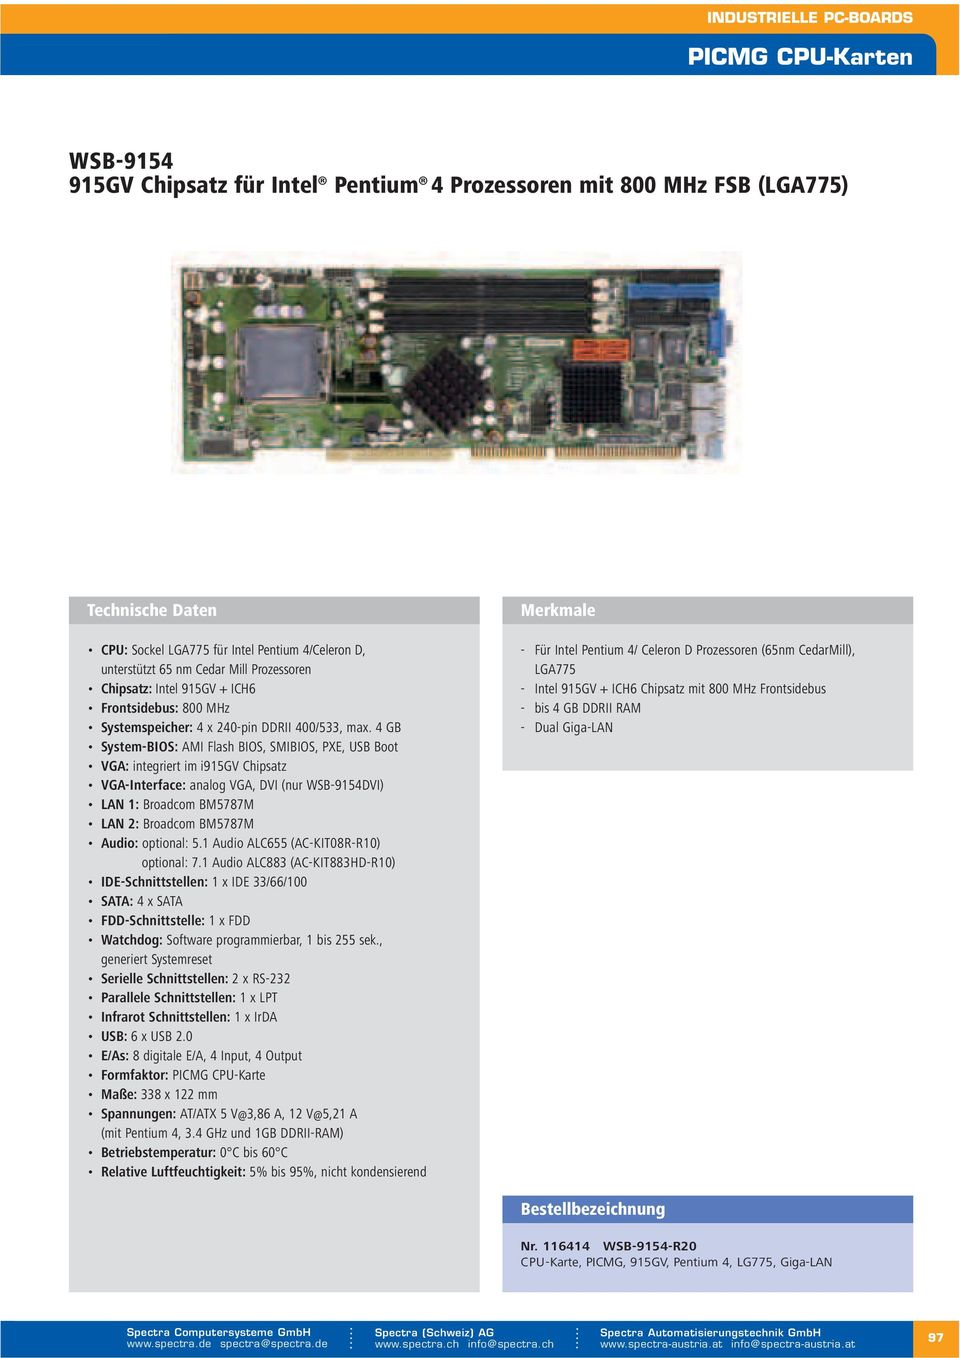 4 GB System-BIOS: AMI Flash BIOS, SMIBIOS, PXE, USB Boot VGA: im i915gv Chipsatz VGA-Interface: analog VGA, DVI (nur WSB-9154DVI) LAN 1: Broadcom BM5787M LAN 2: Broadcom BM5787M Audio: optional: 5.